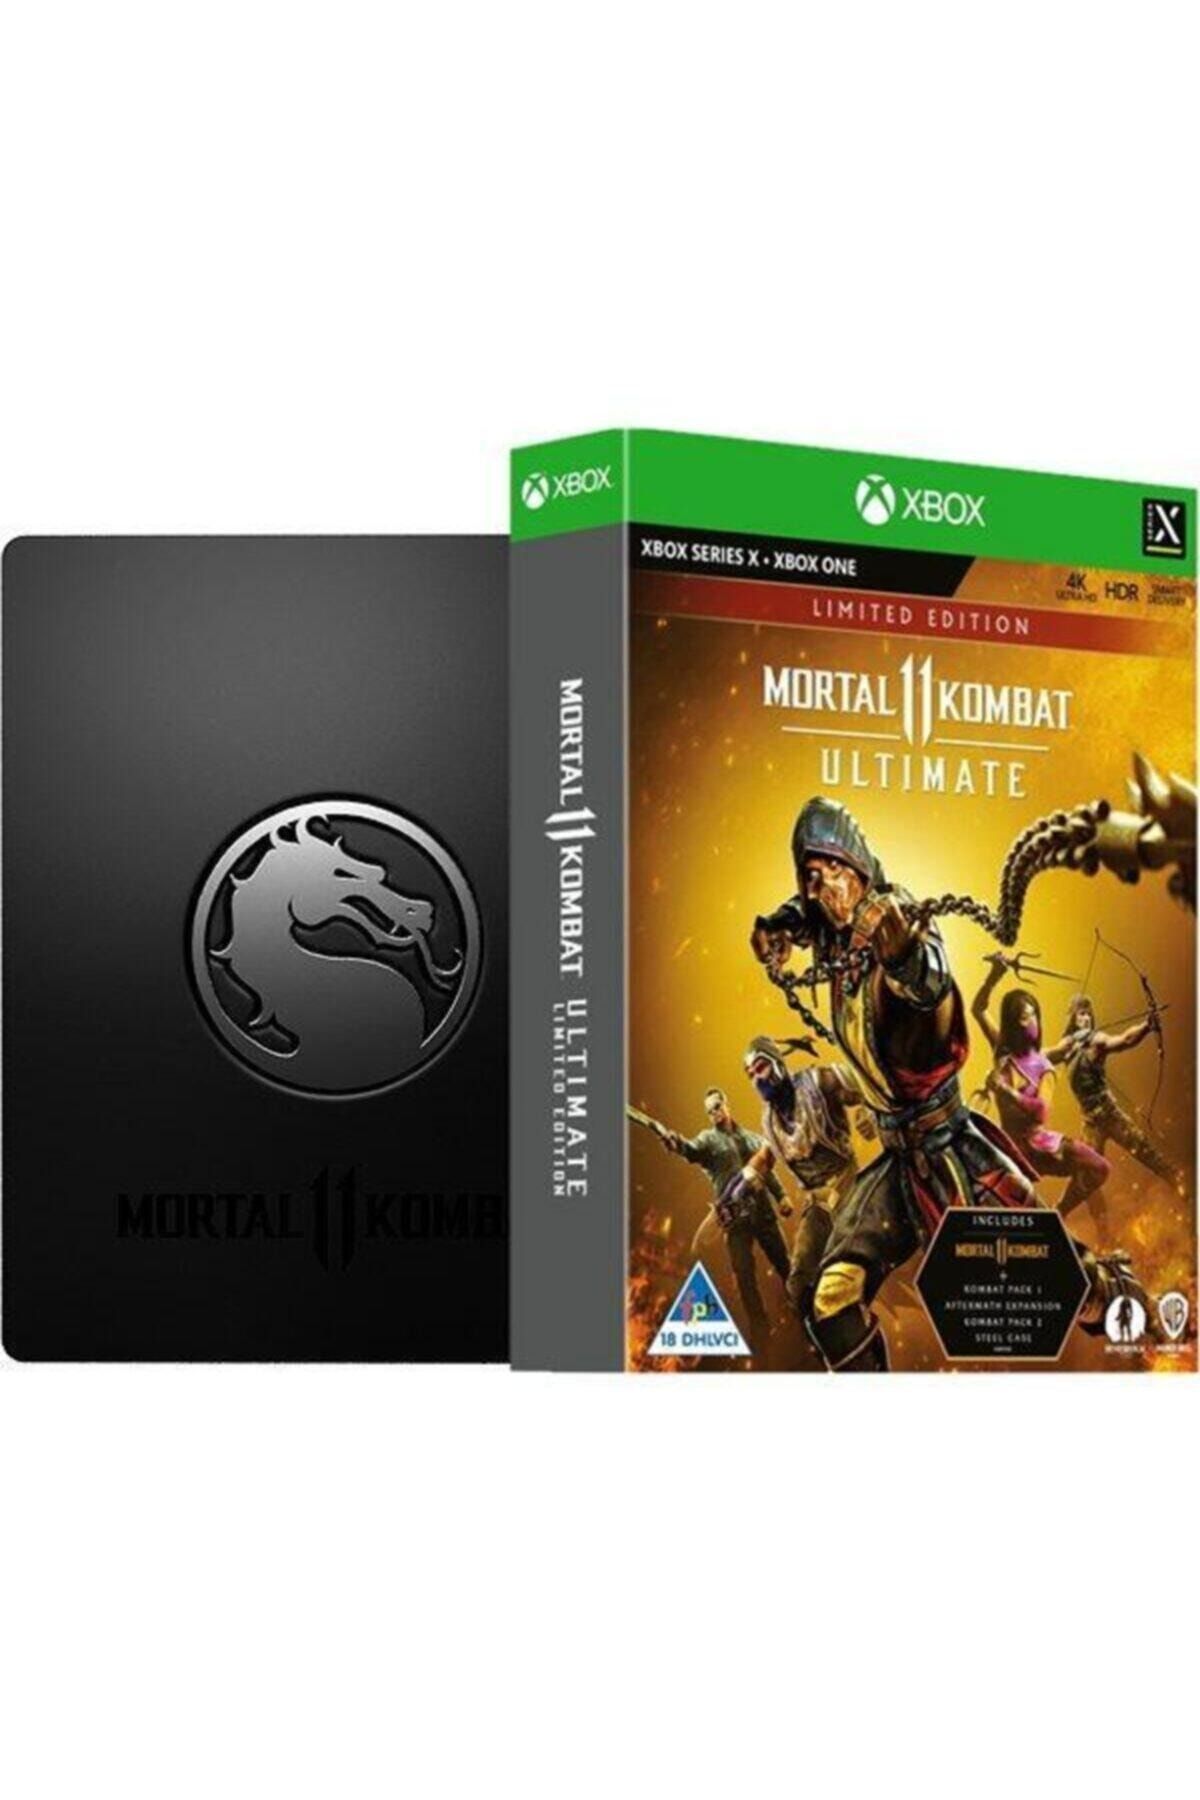 Warner Bros Mortal Kombat 11 Ultimate Limited Edition Xbox One Series X